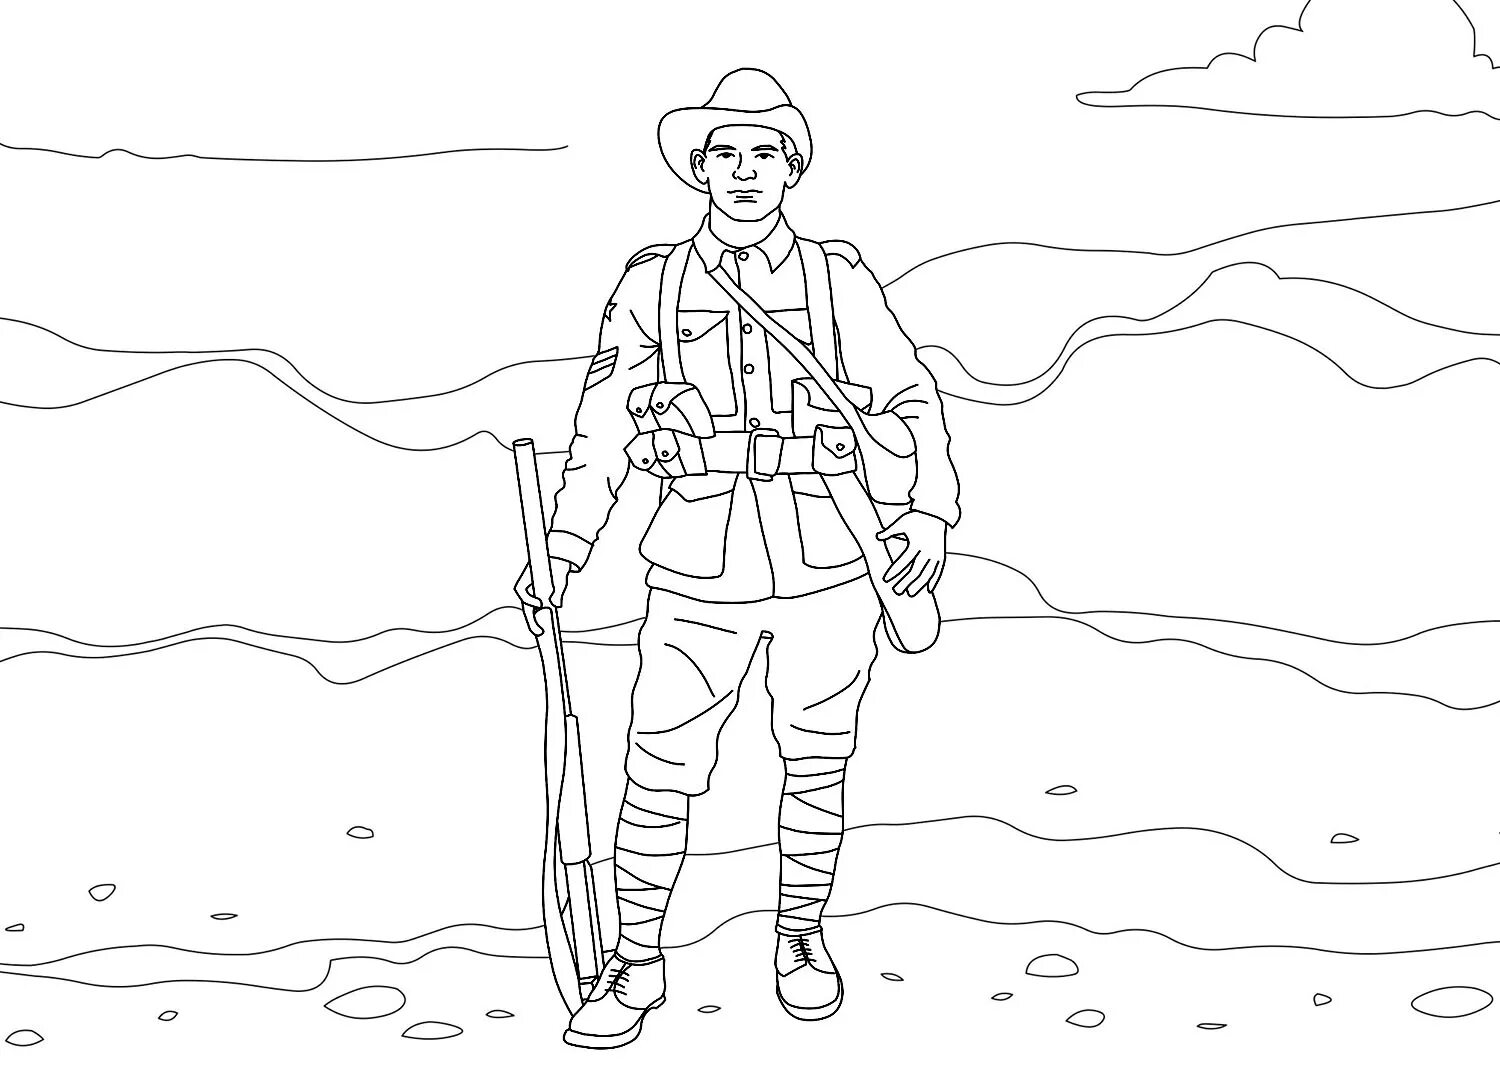 Coloring sheet soldier shining hero